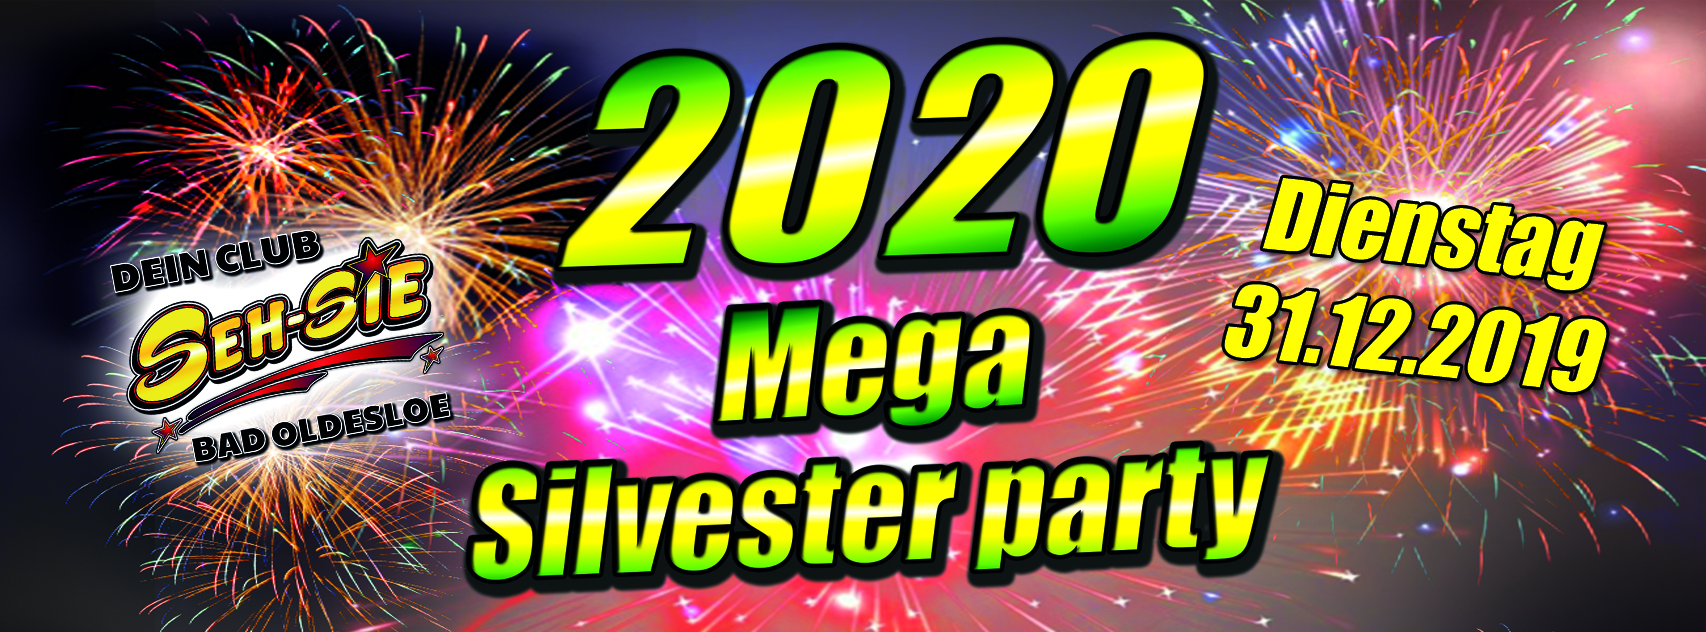 31.12.2019 Mega Silvester Party